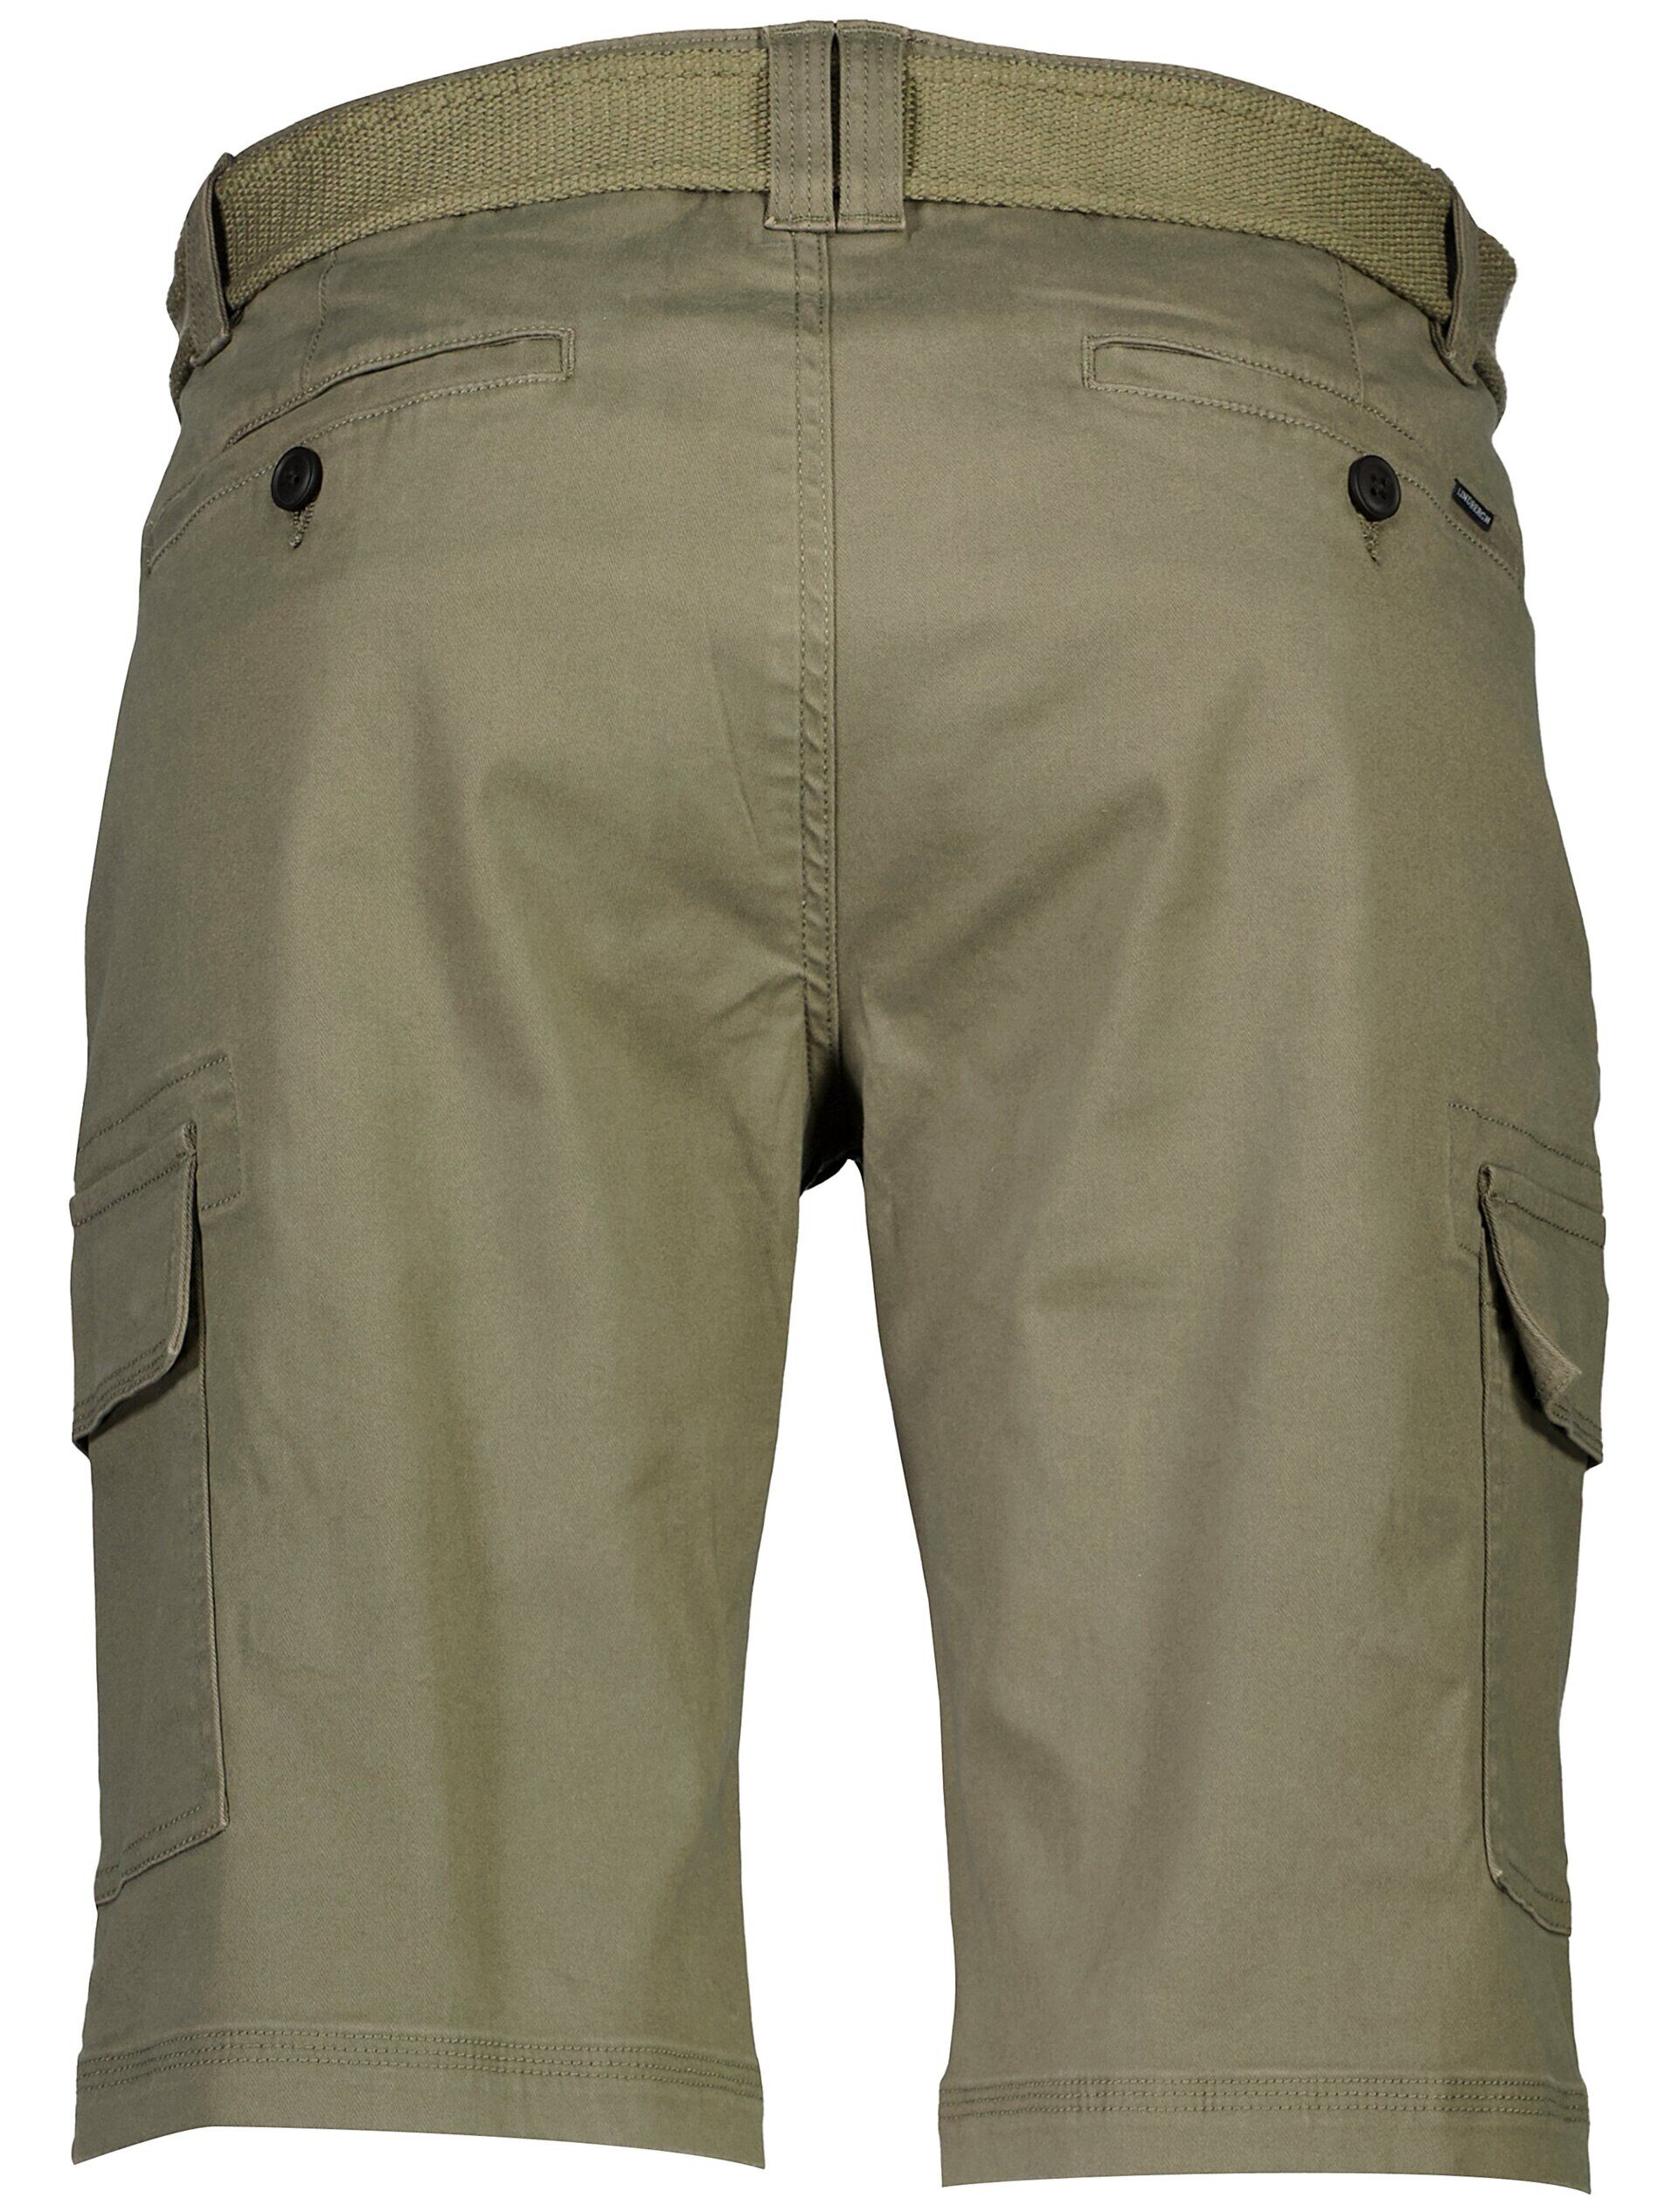 Cargo shorts 30-525025